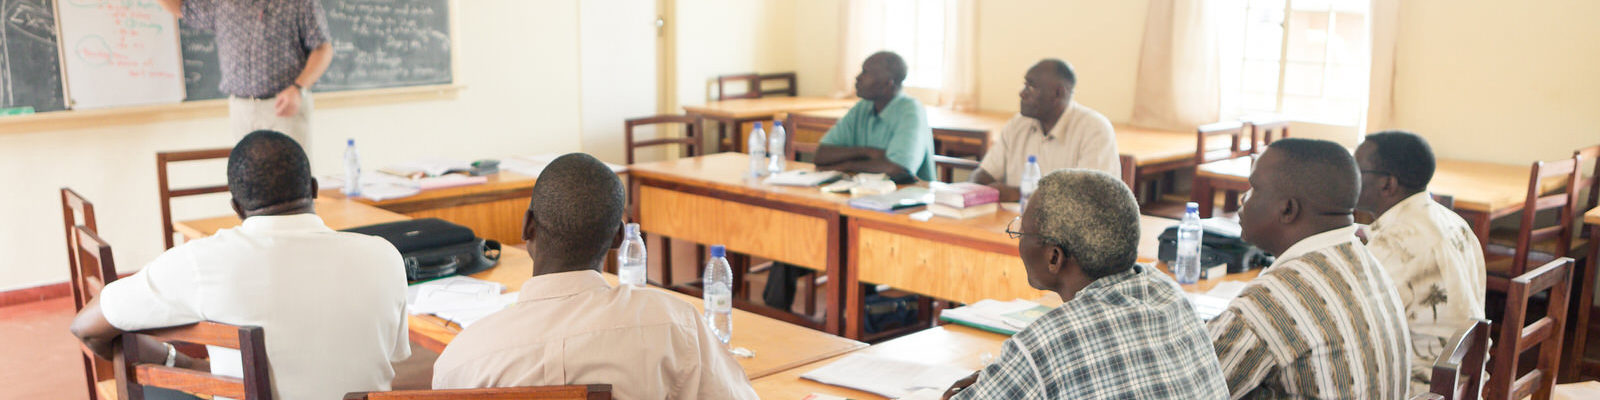 Malawi Classroom